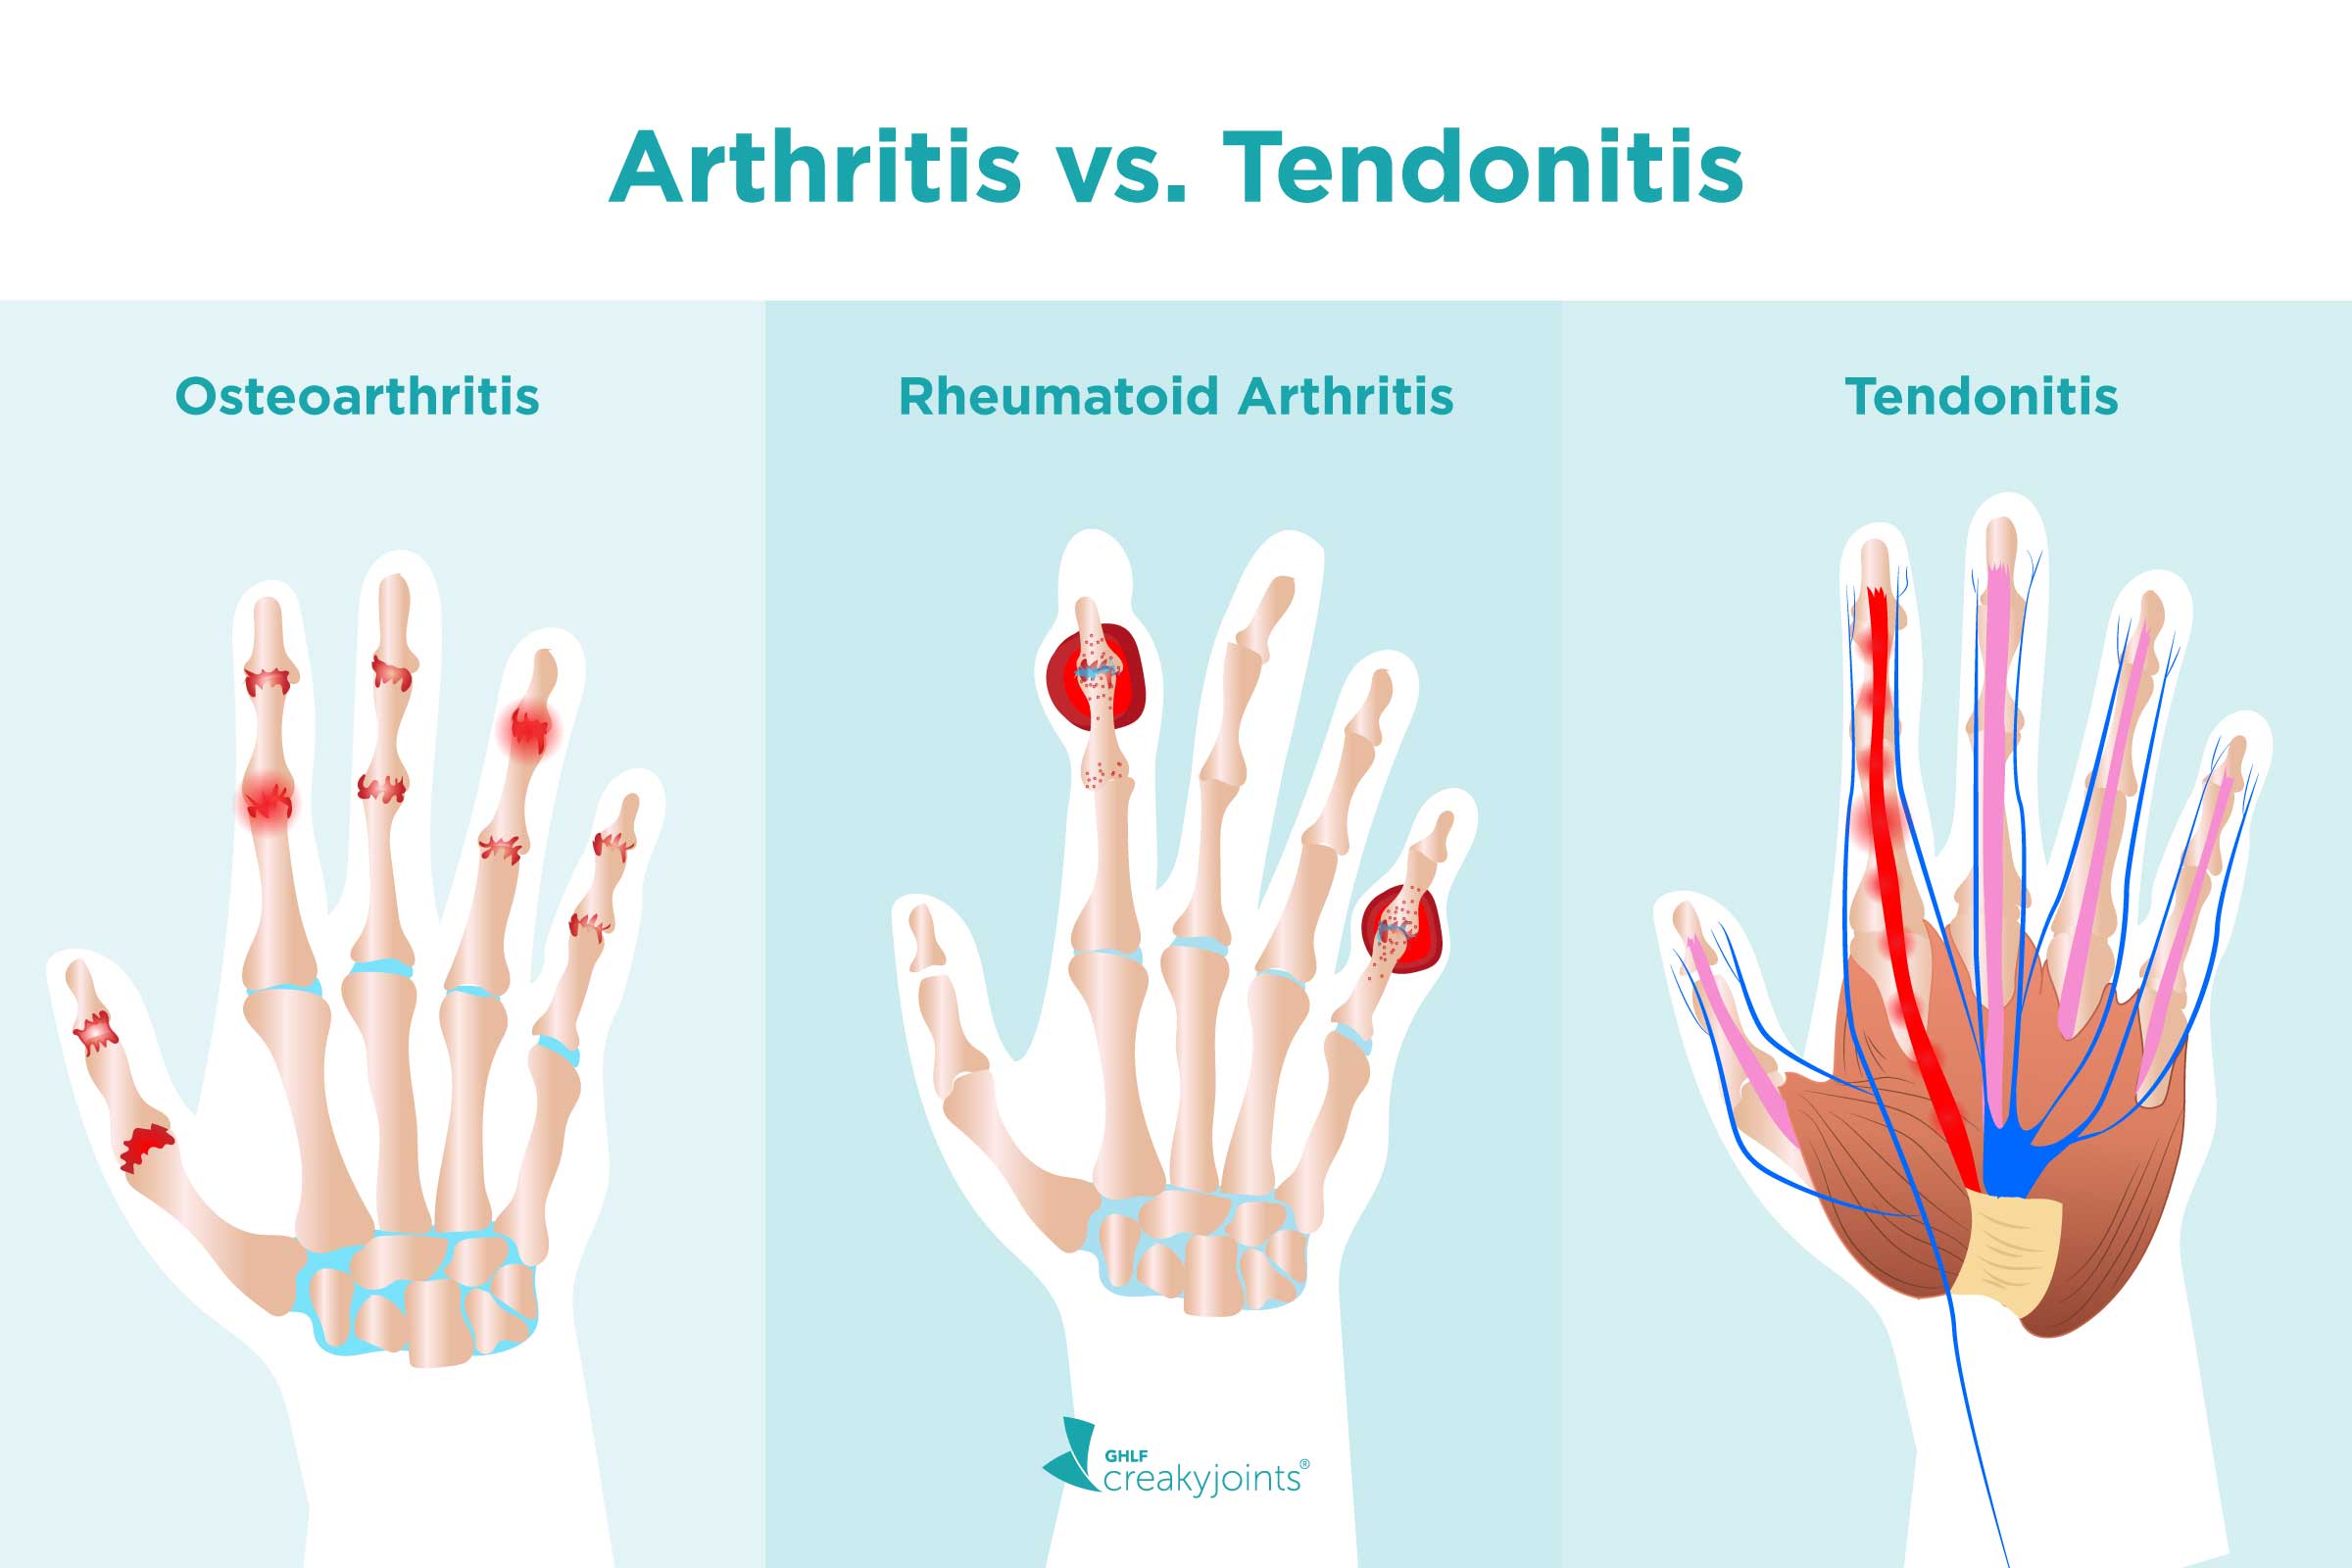 Kéfir y artritis reumatoide